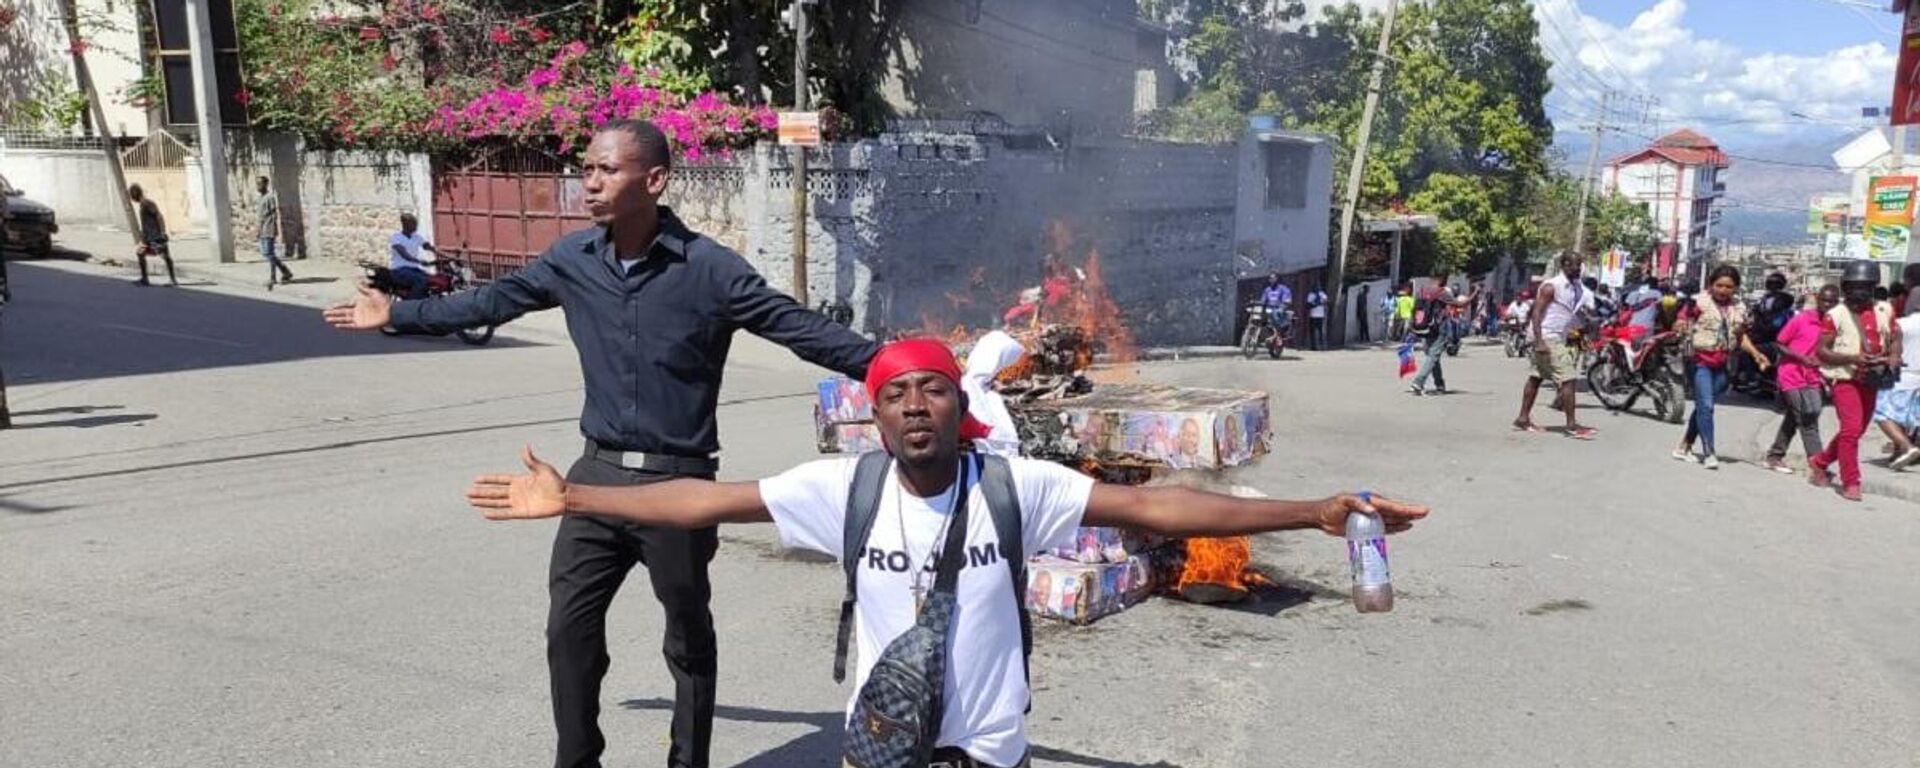 Barricadas y protestas en Haití - Sputnik Mundo, 1920, 24.02.2022